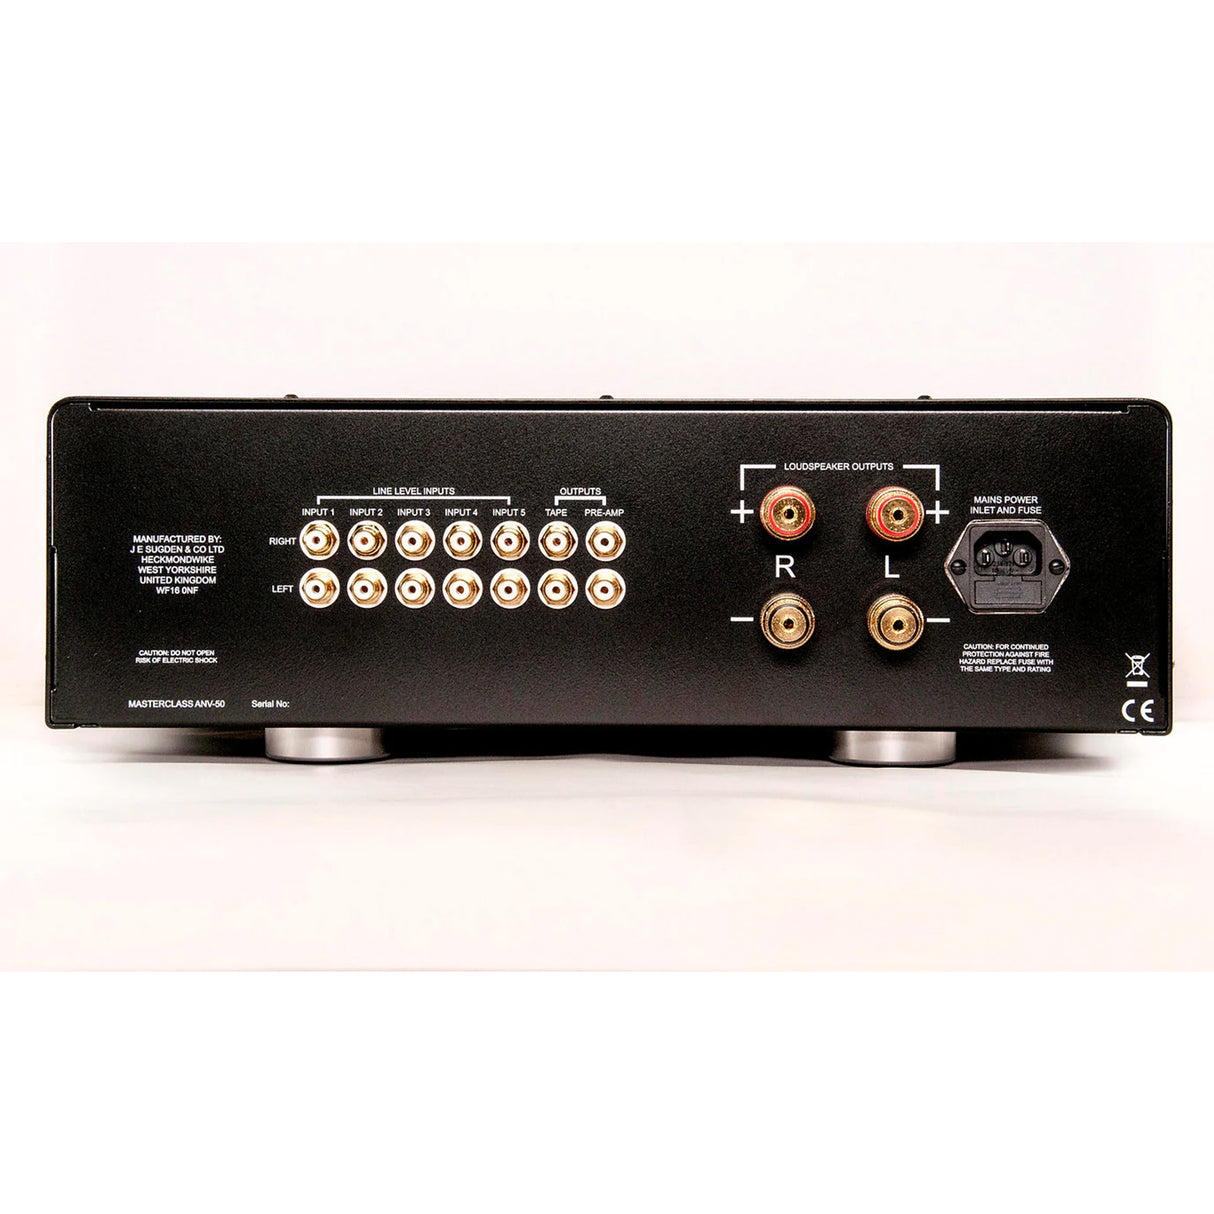 Sugden Master Class ANV-50 - Stereo Integrated Amplifier (Class A Amp)